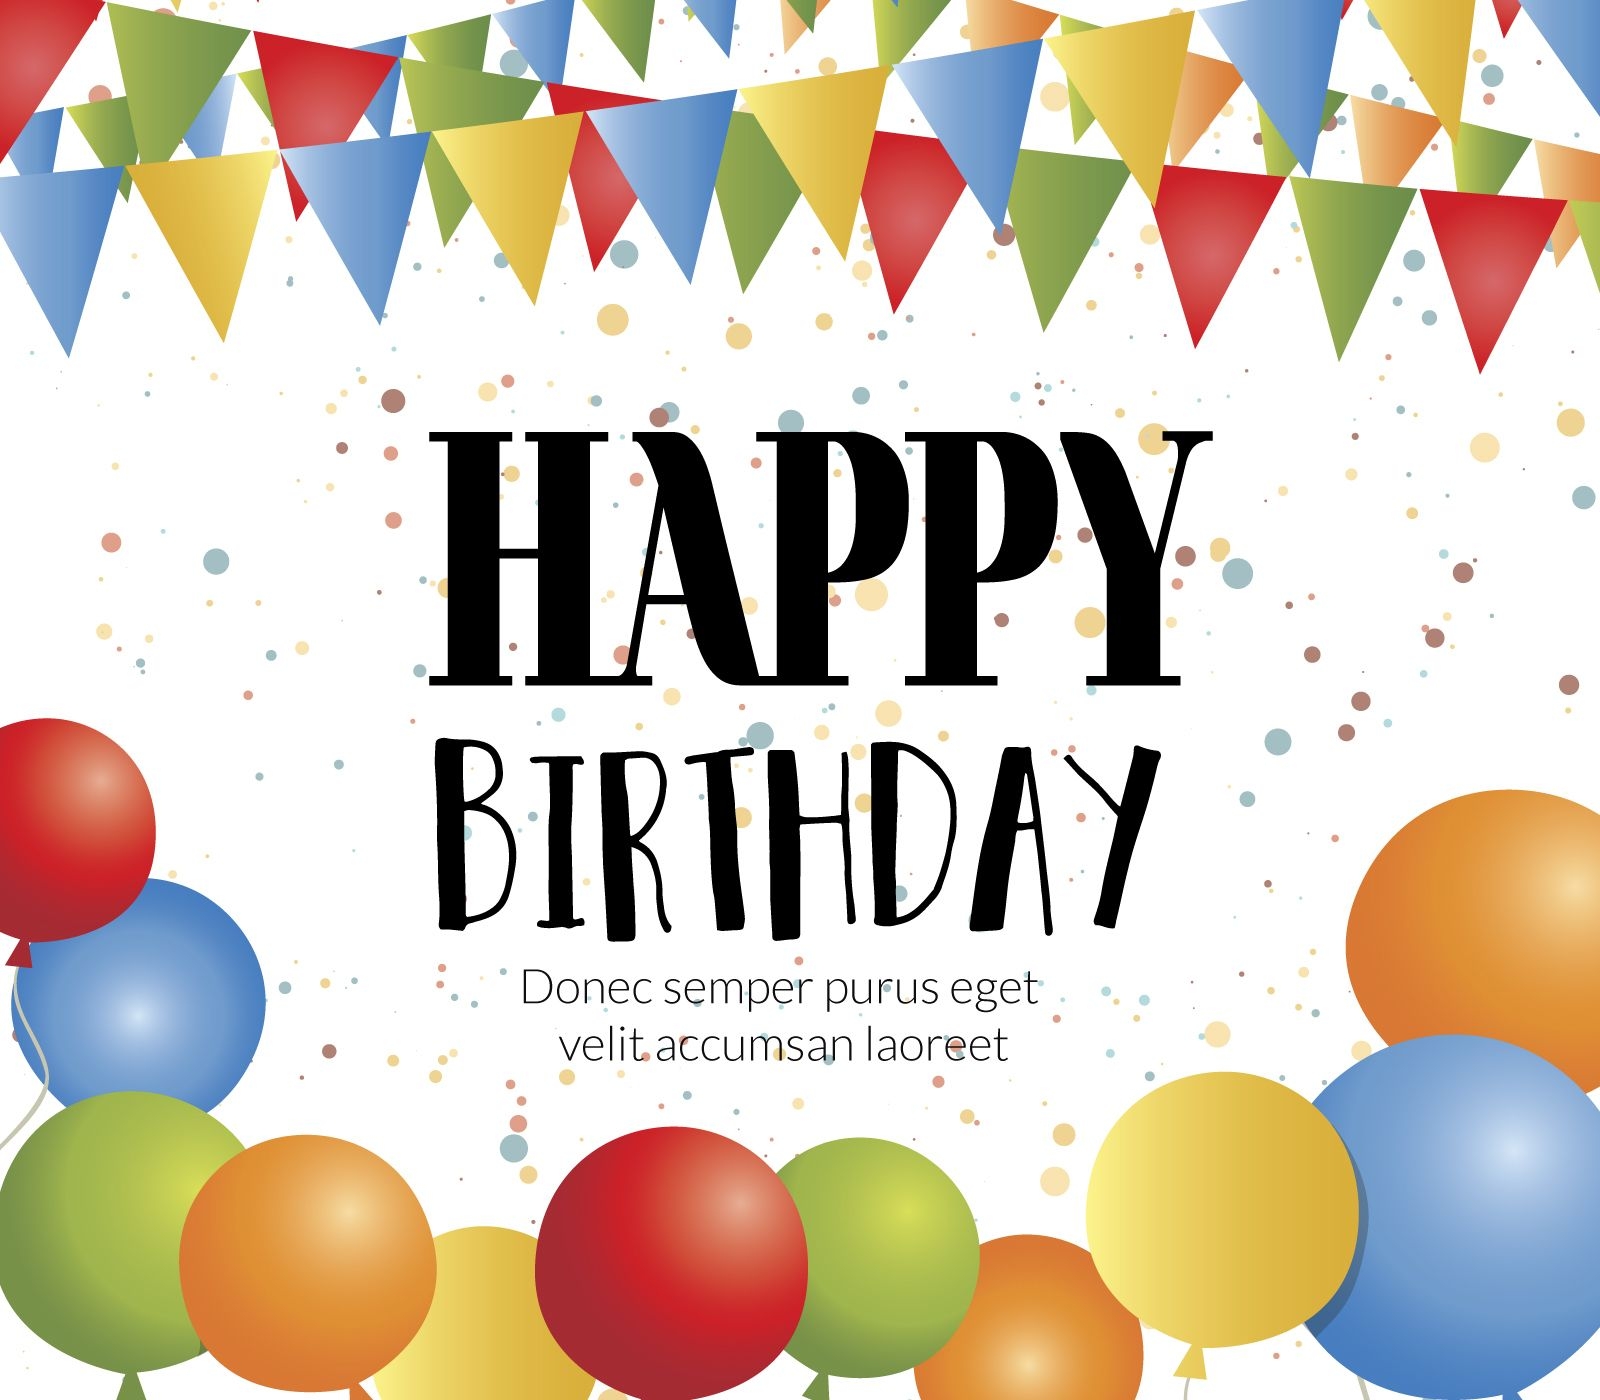 Happy Birthday card maker - Editable design